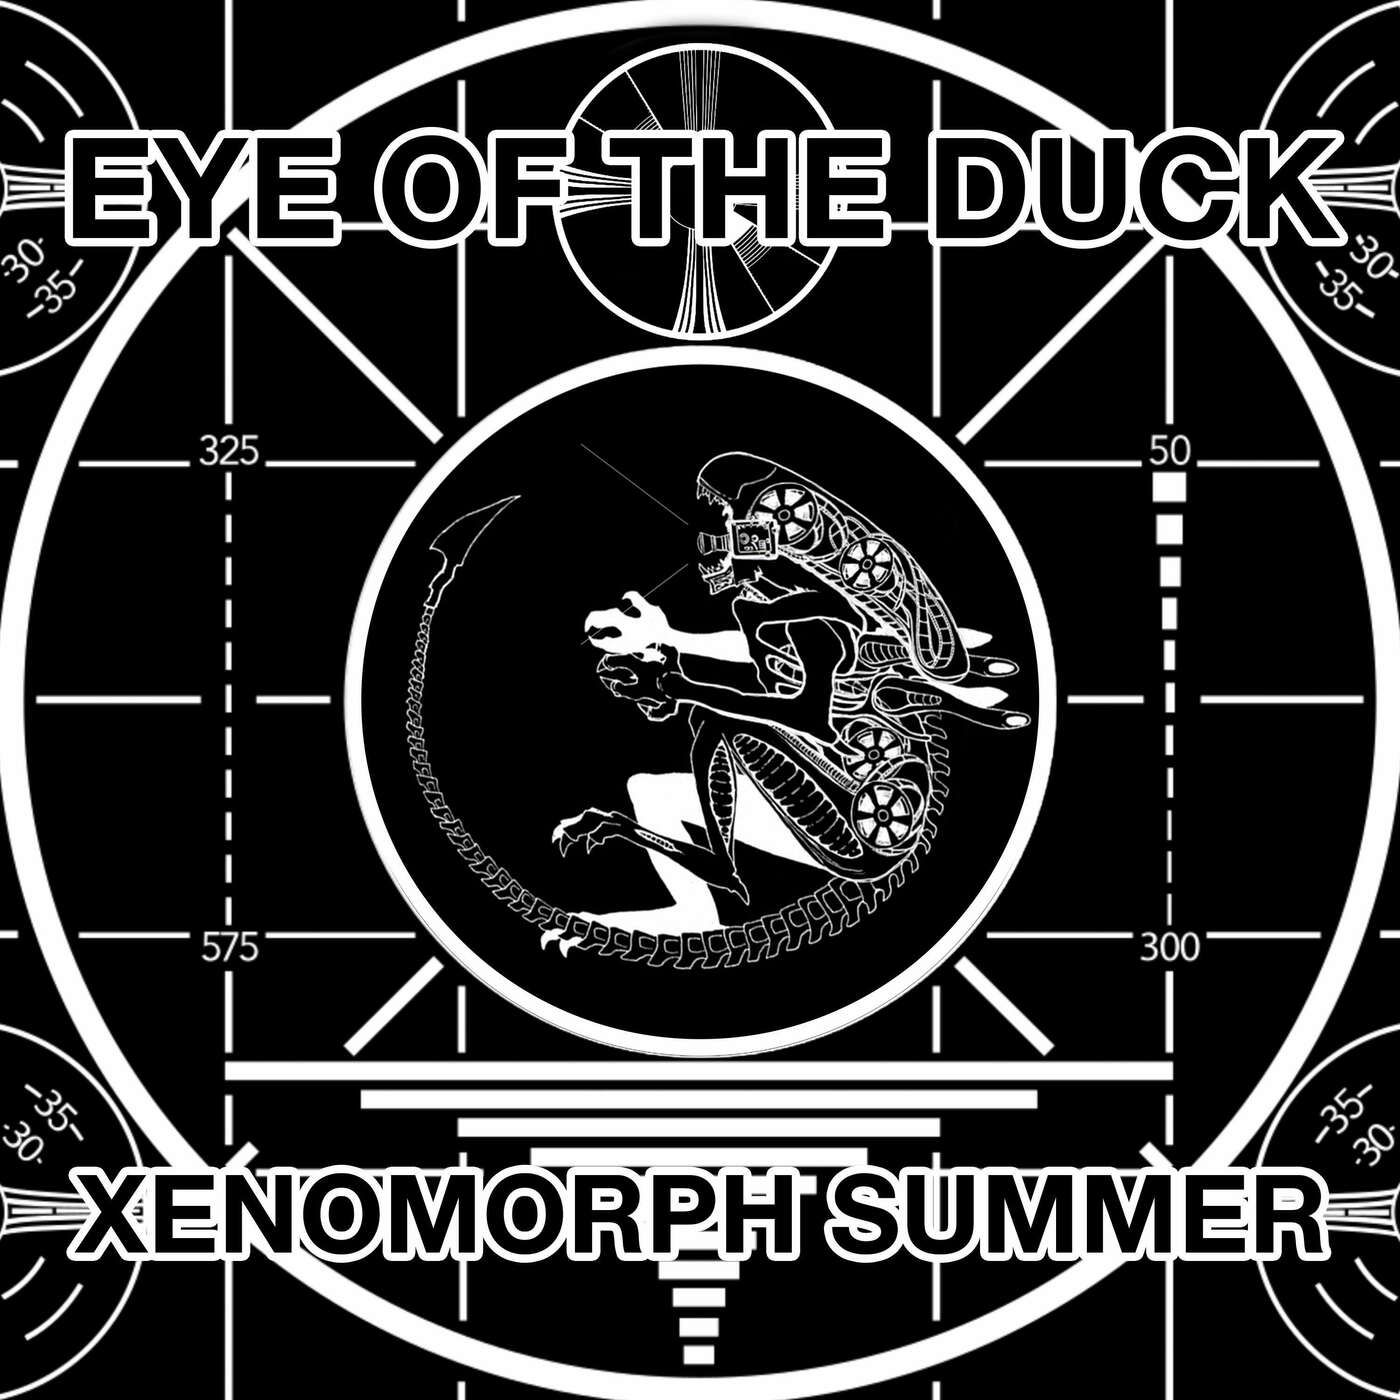 Introducing Xenomorph Summer